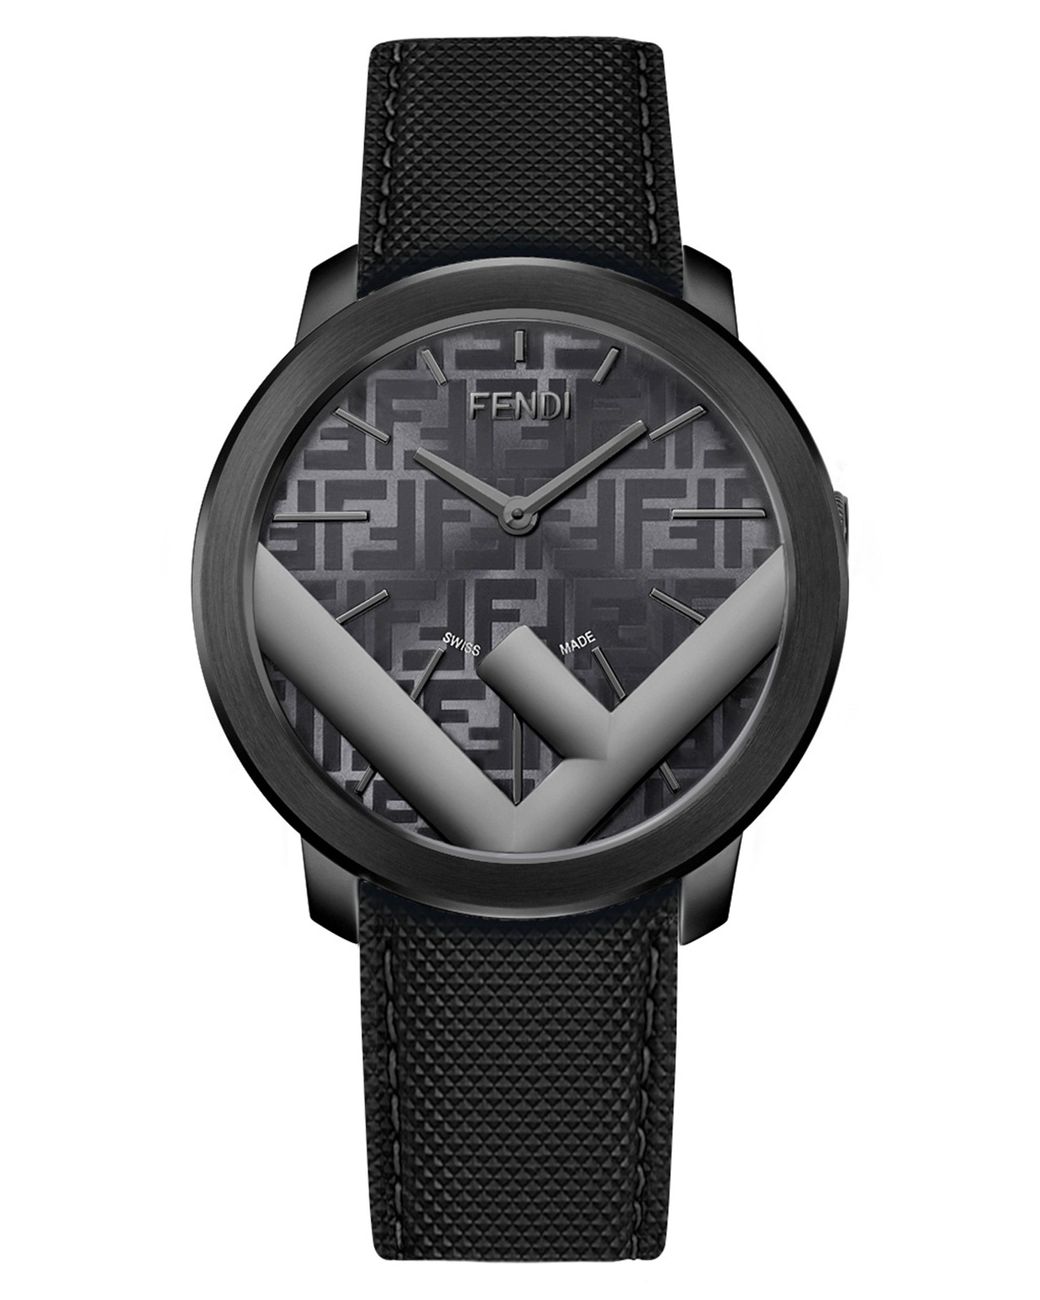 Fendi Leather Run Away Woven Strap Watch in Black/ Grey (Black) - Lyst